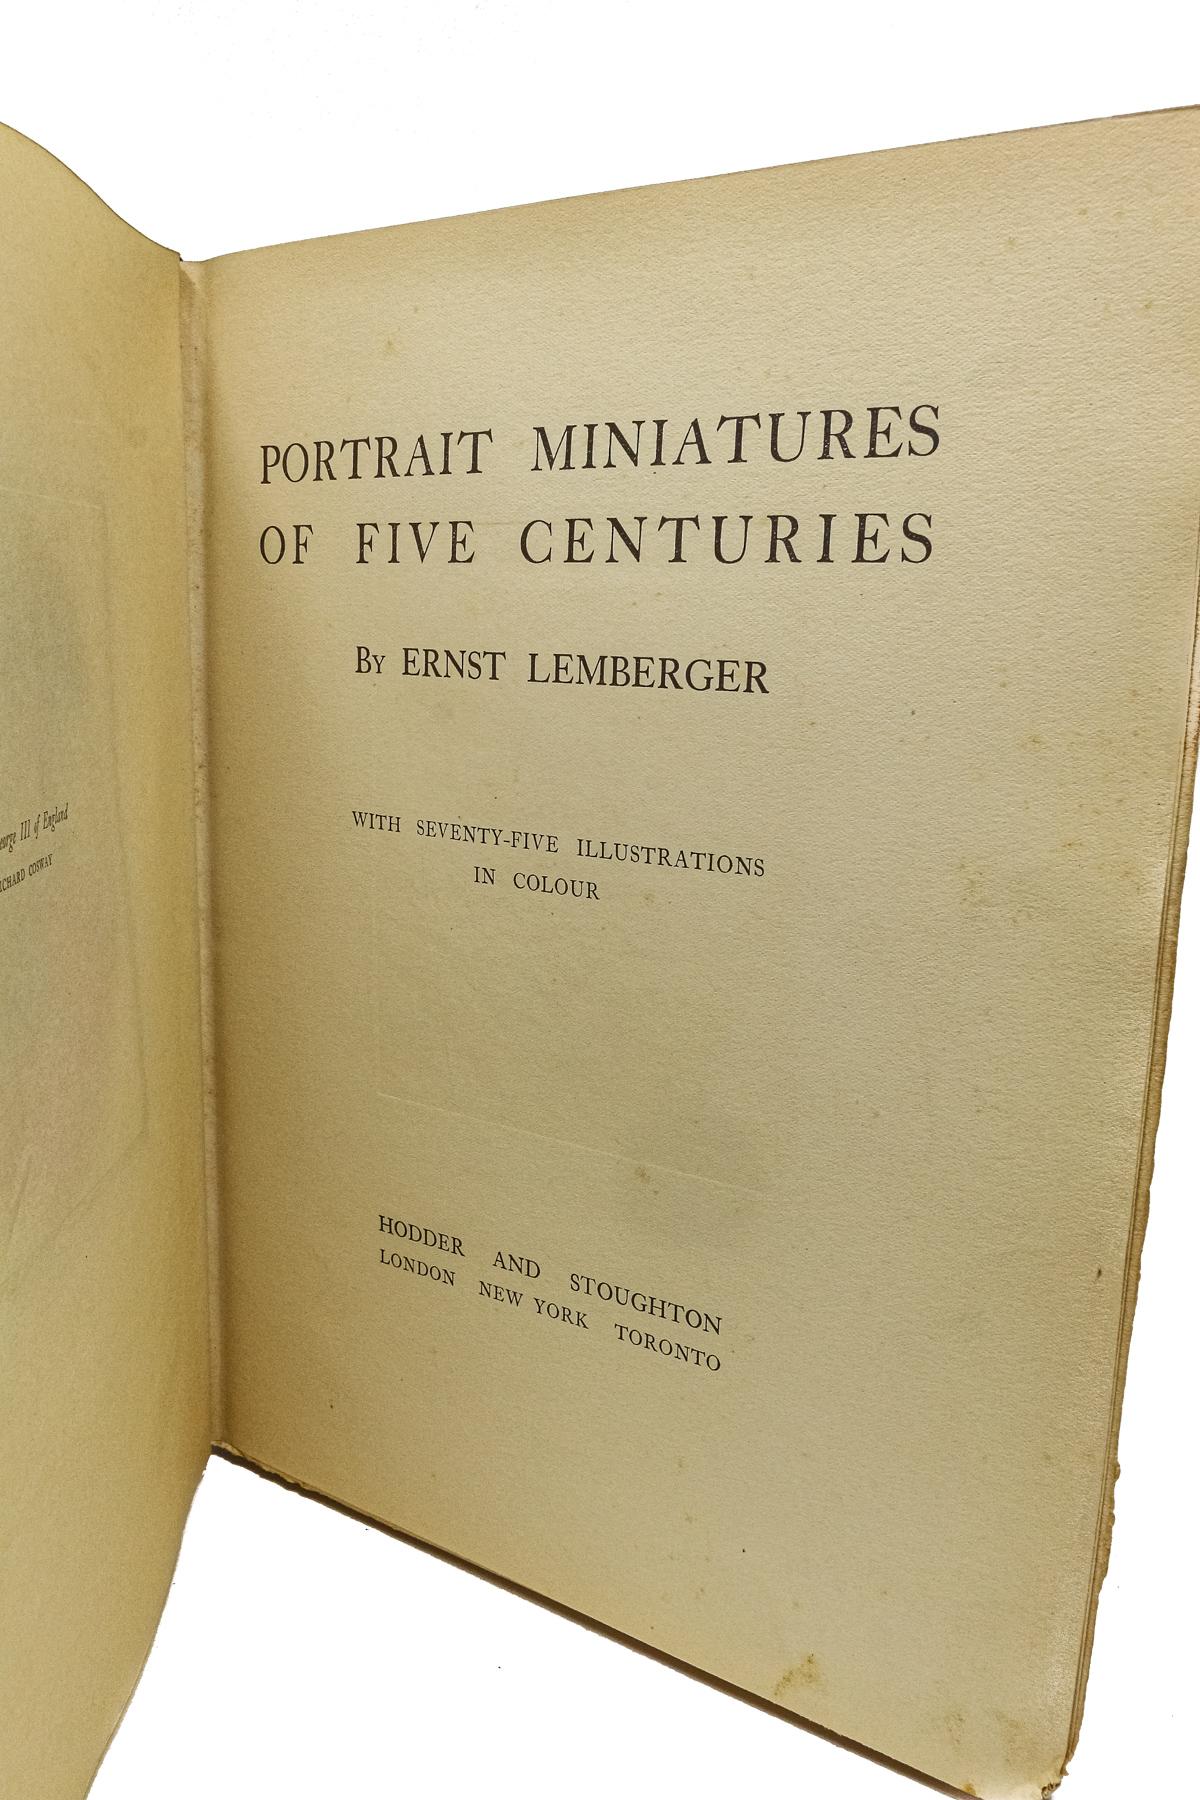 "PORTRAITS MINIATURES OF FIVE CENTURIES"